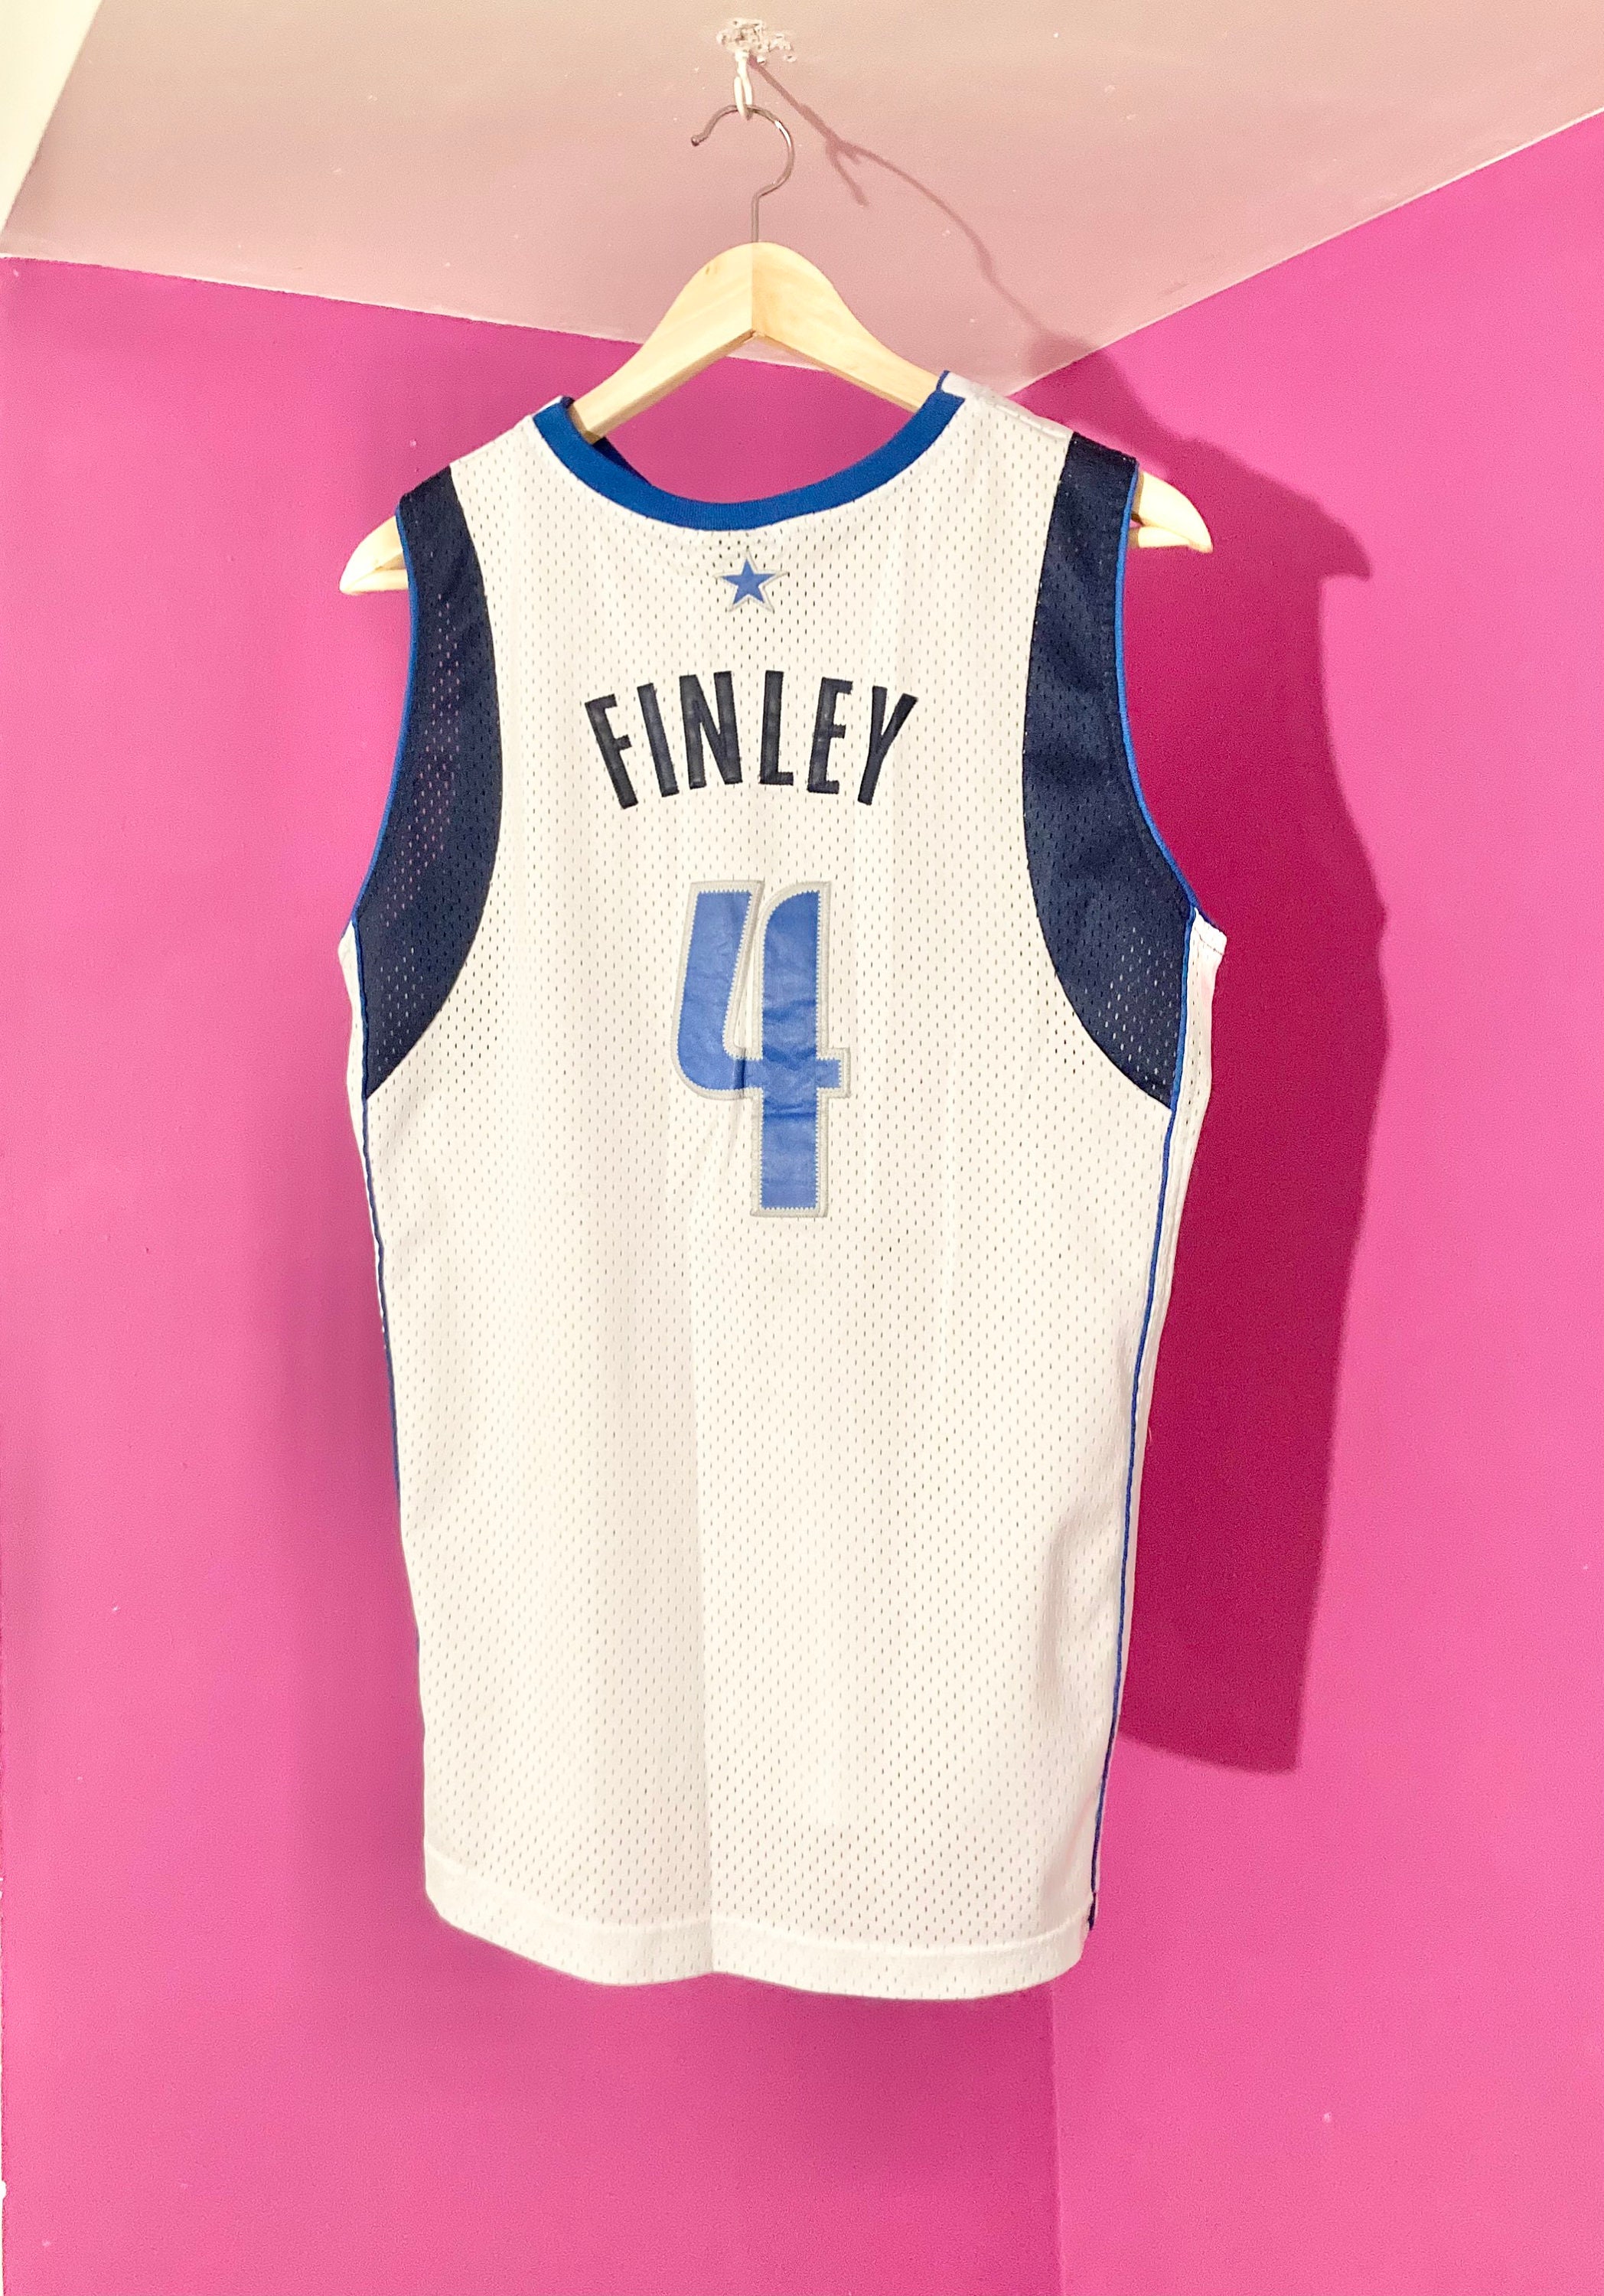 Nike Dallas Mavericks NBA *Finley* Champion Shirt S. Boys